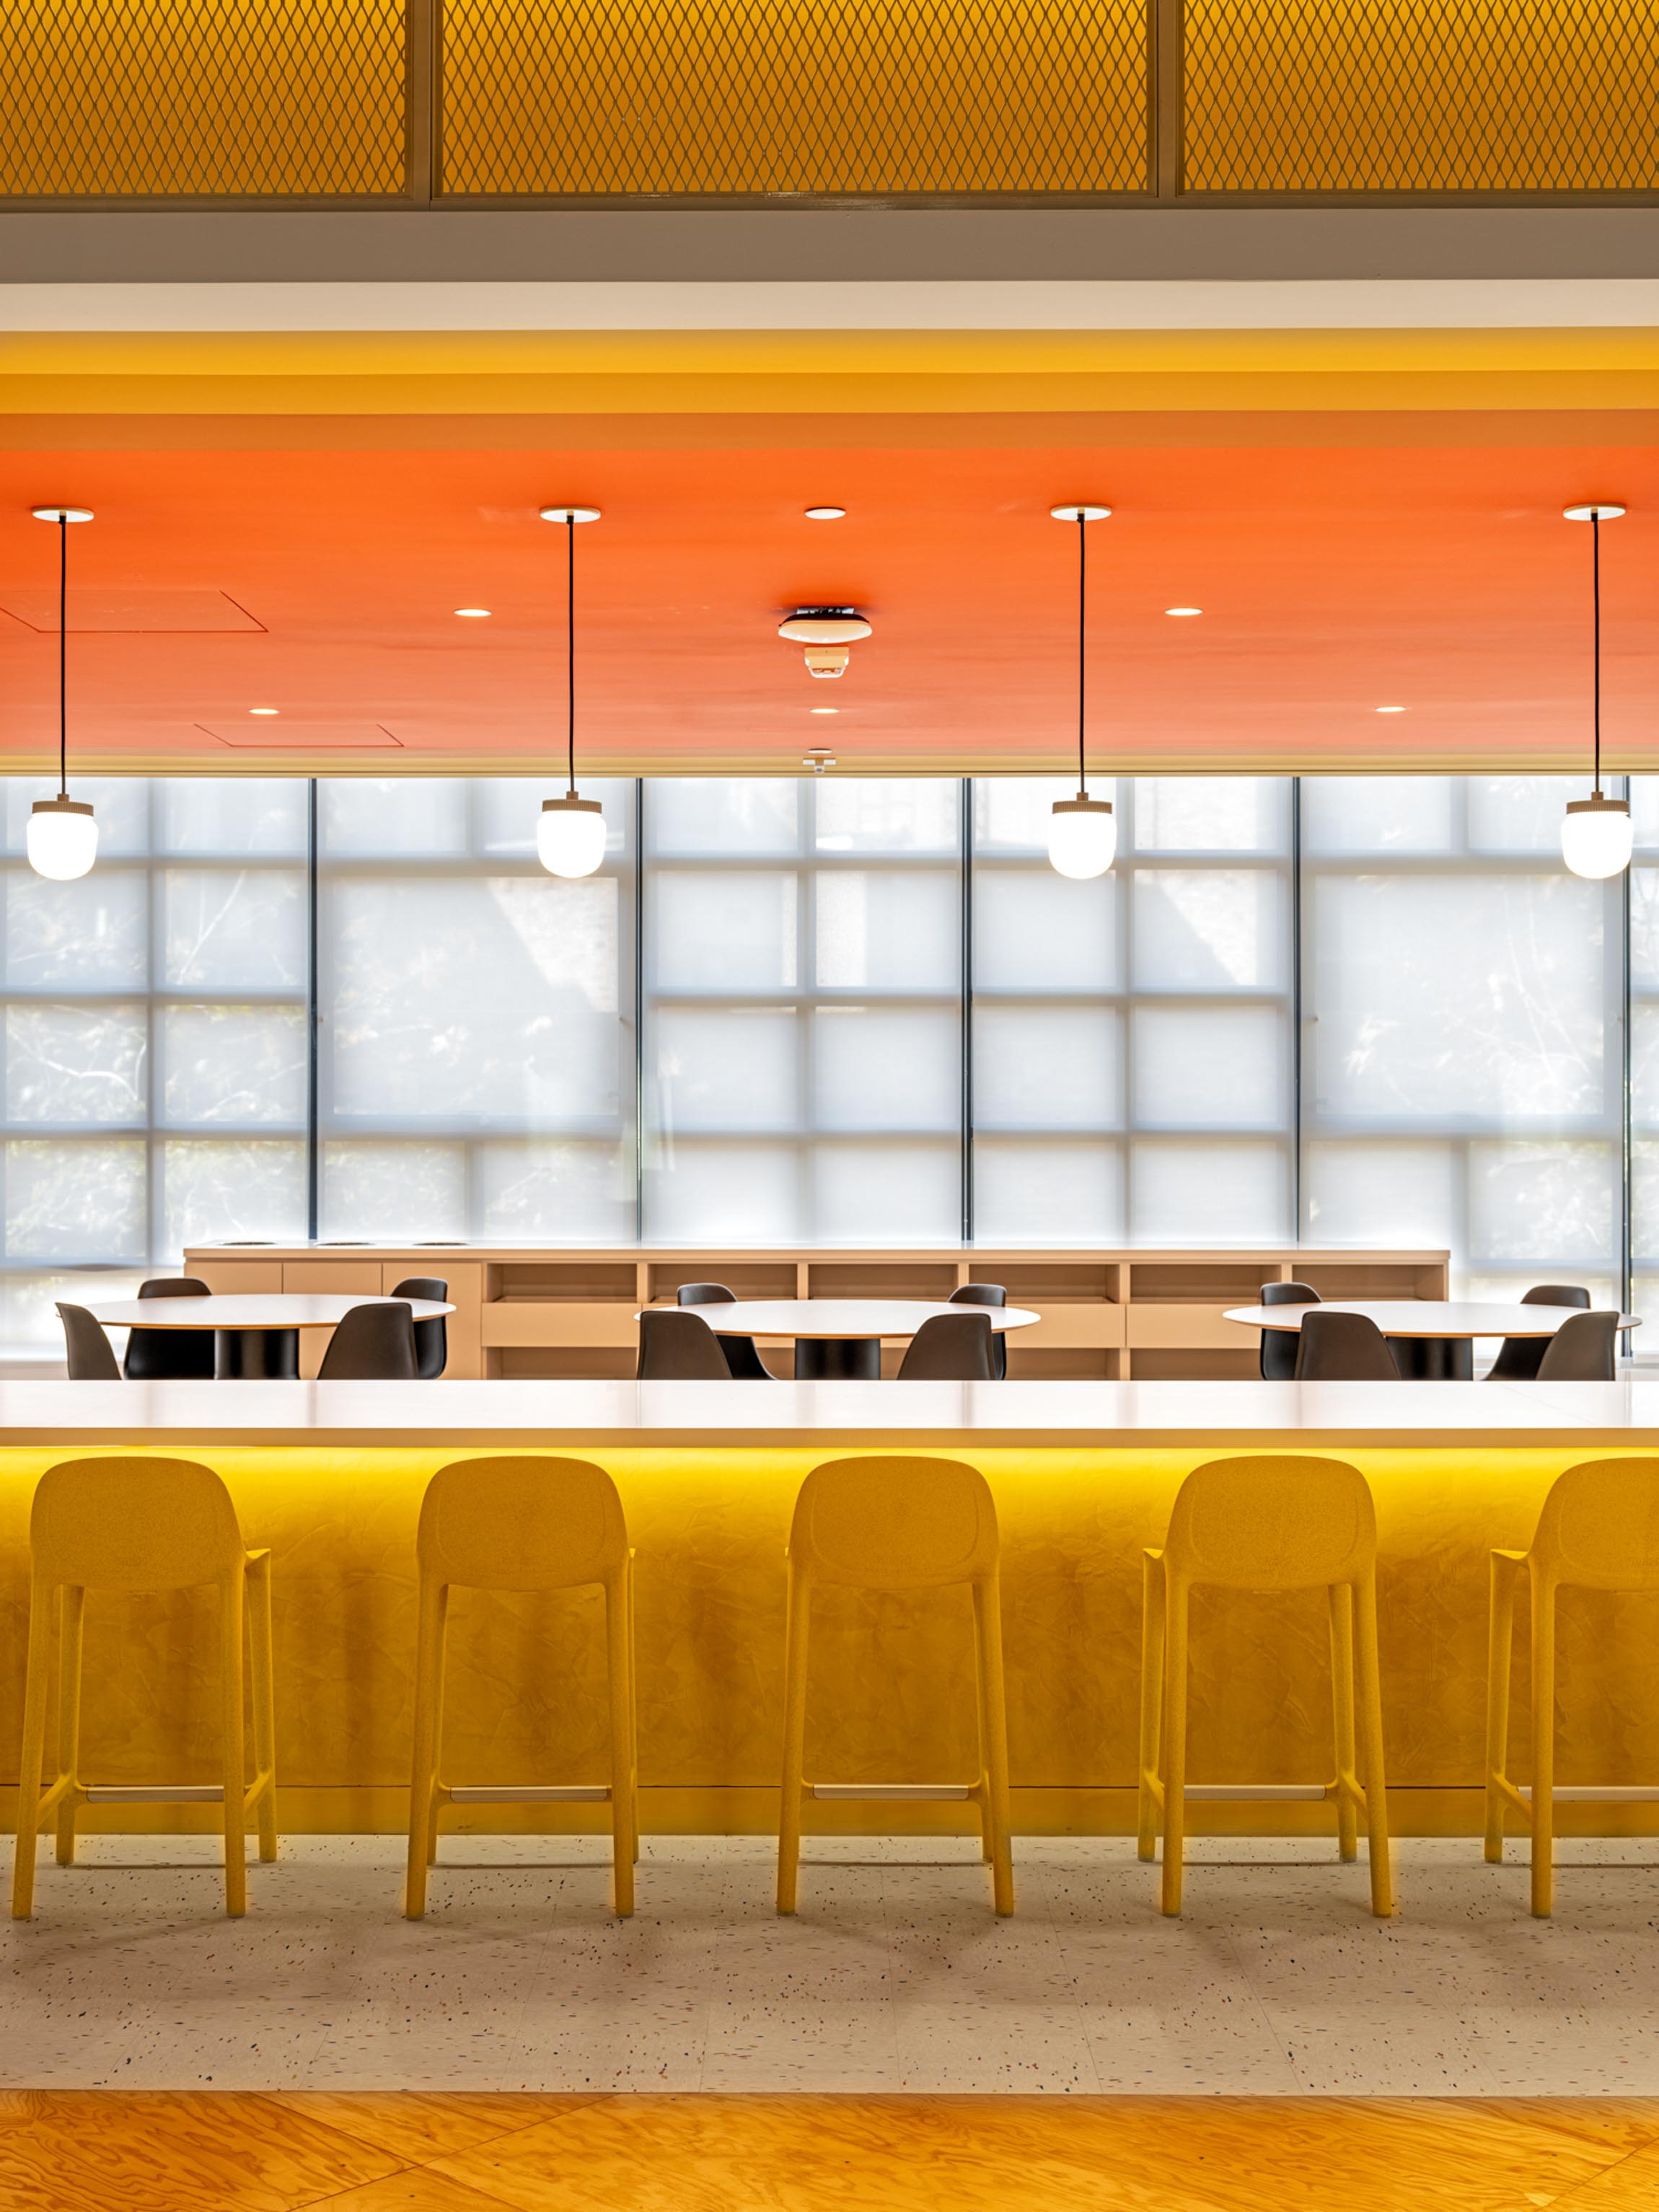 Vibrant yellow and orange cafe bar